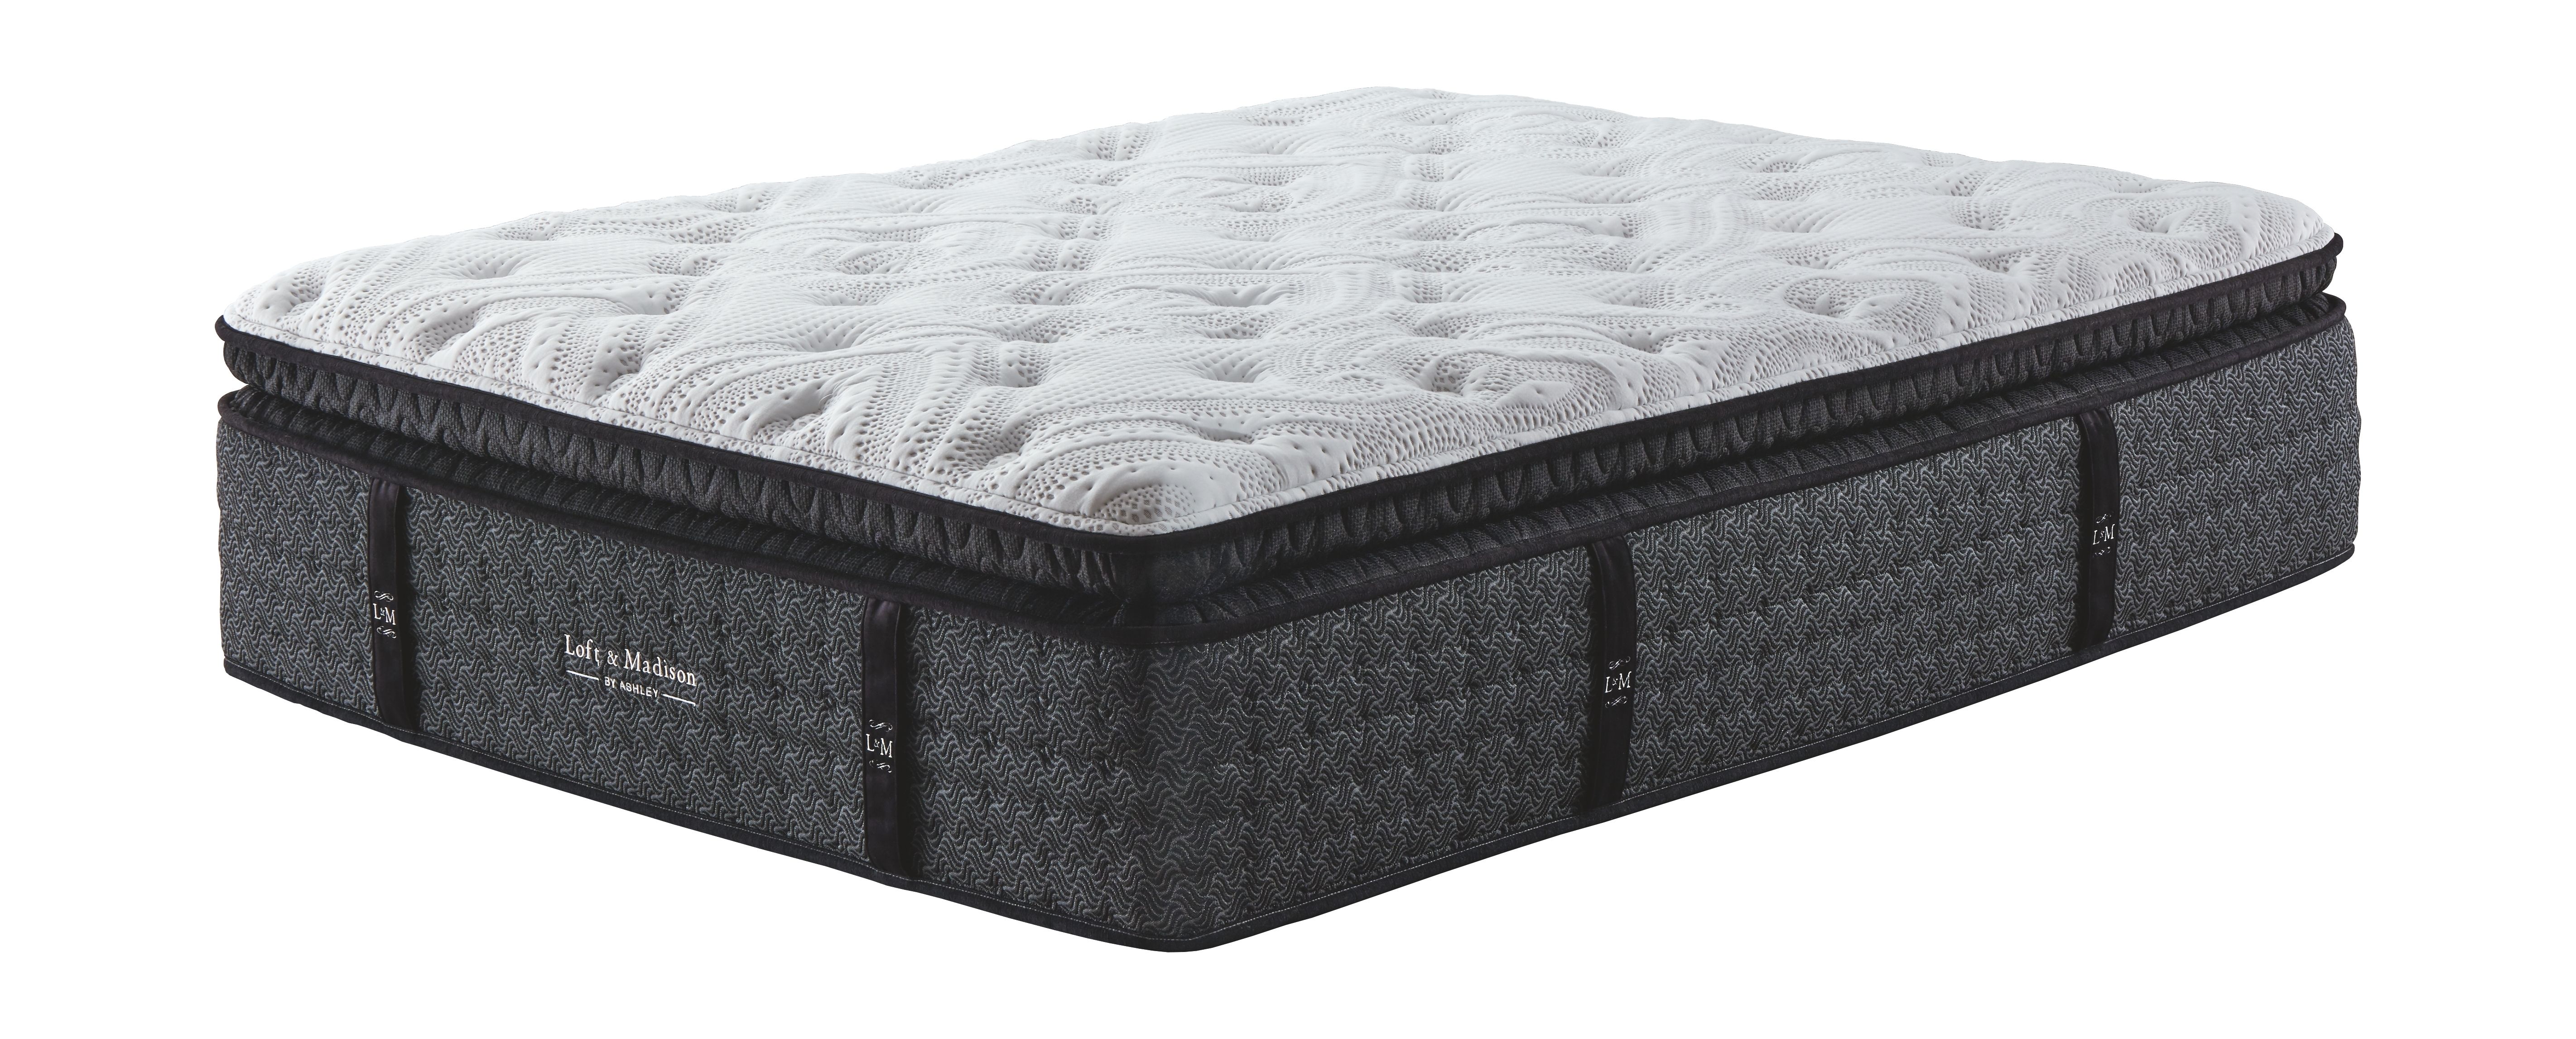 ultra plush mattress canada